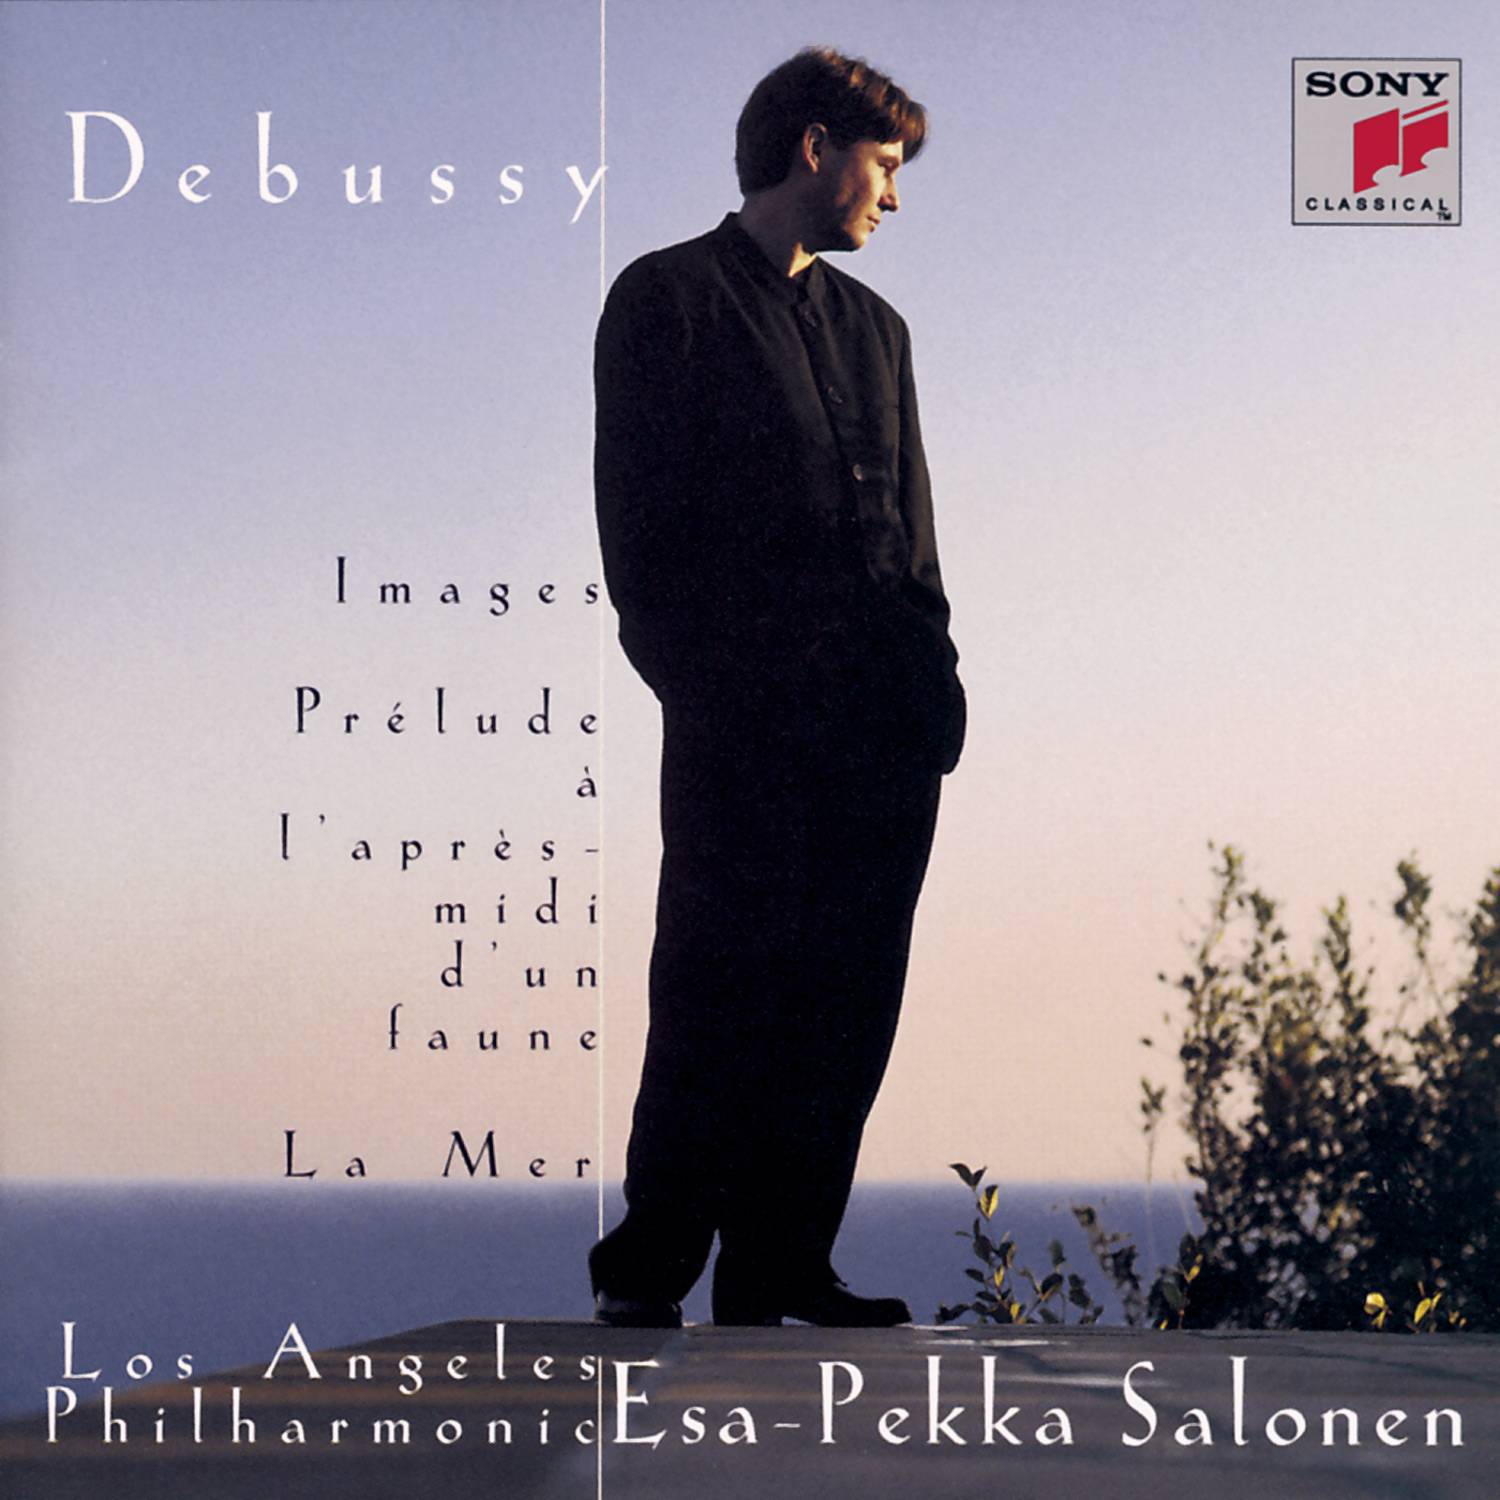 Debussy: Images pour orchestre, Pre lude a l' apre smidi d' un faune  La mer